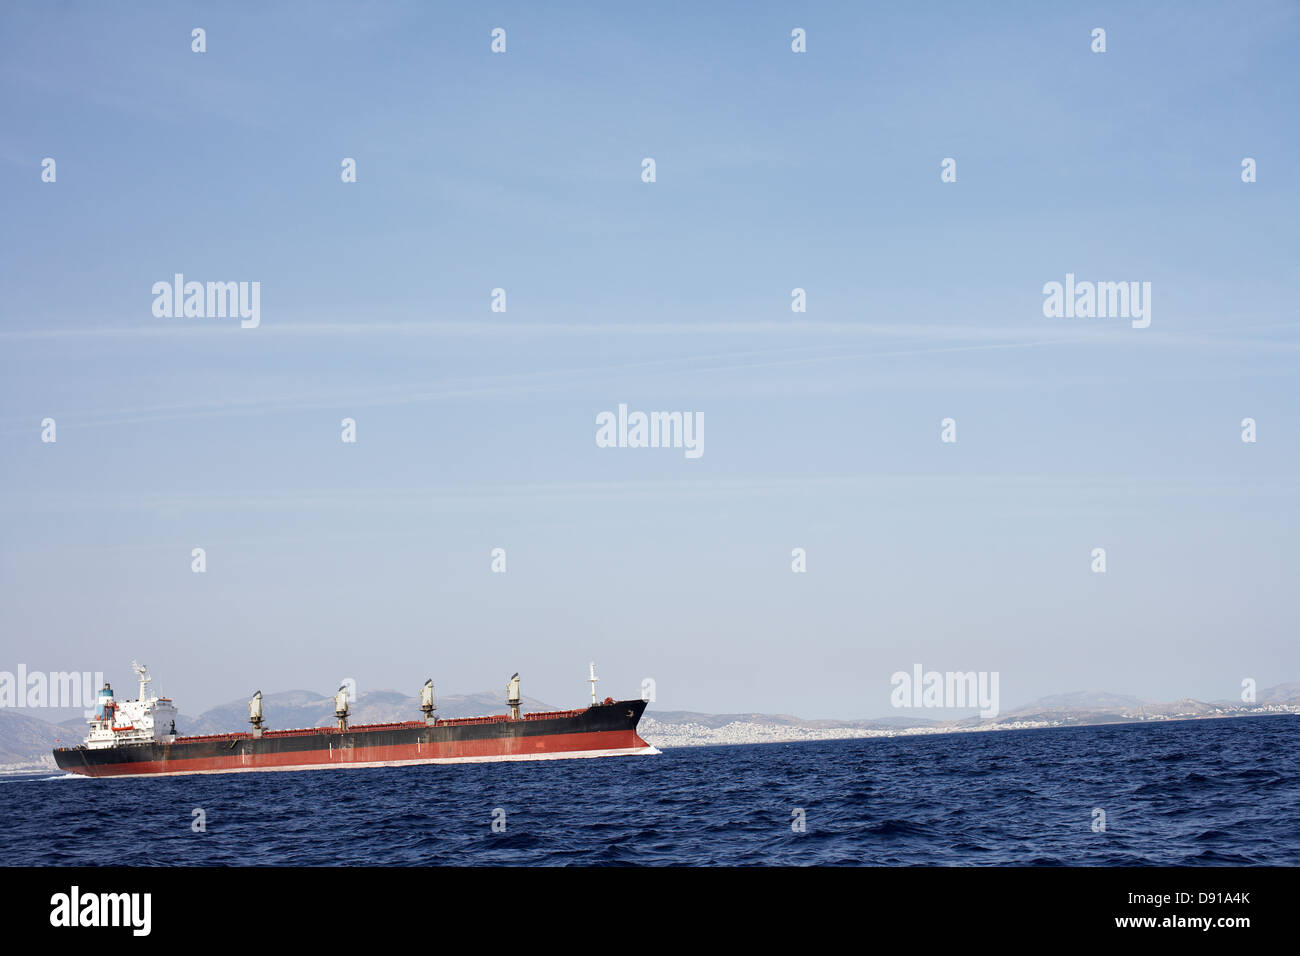 An oiltanker in the Mediterranean Sea. Stock Photo